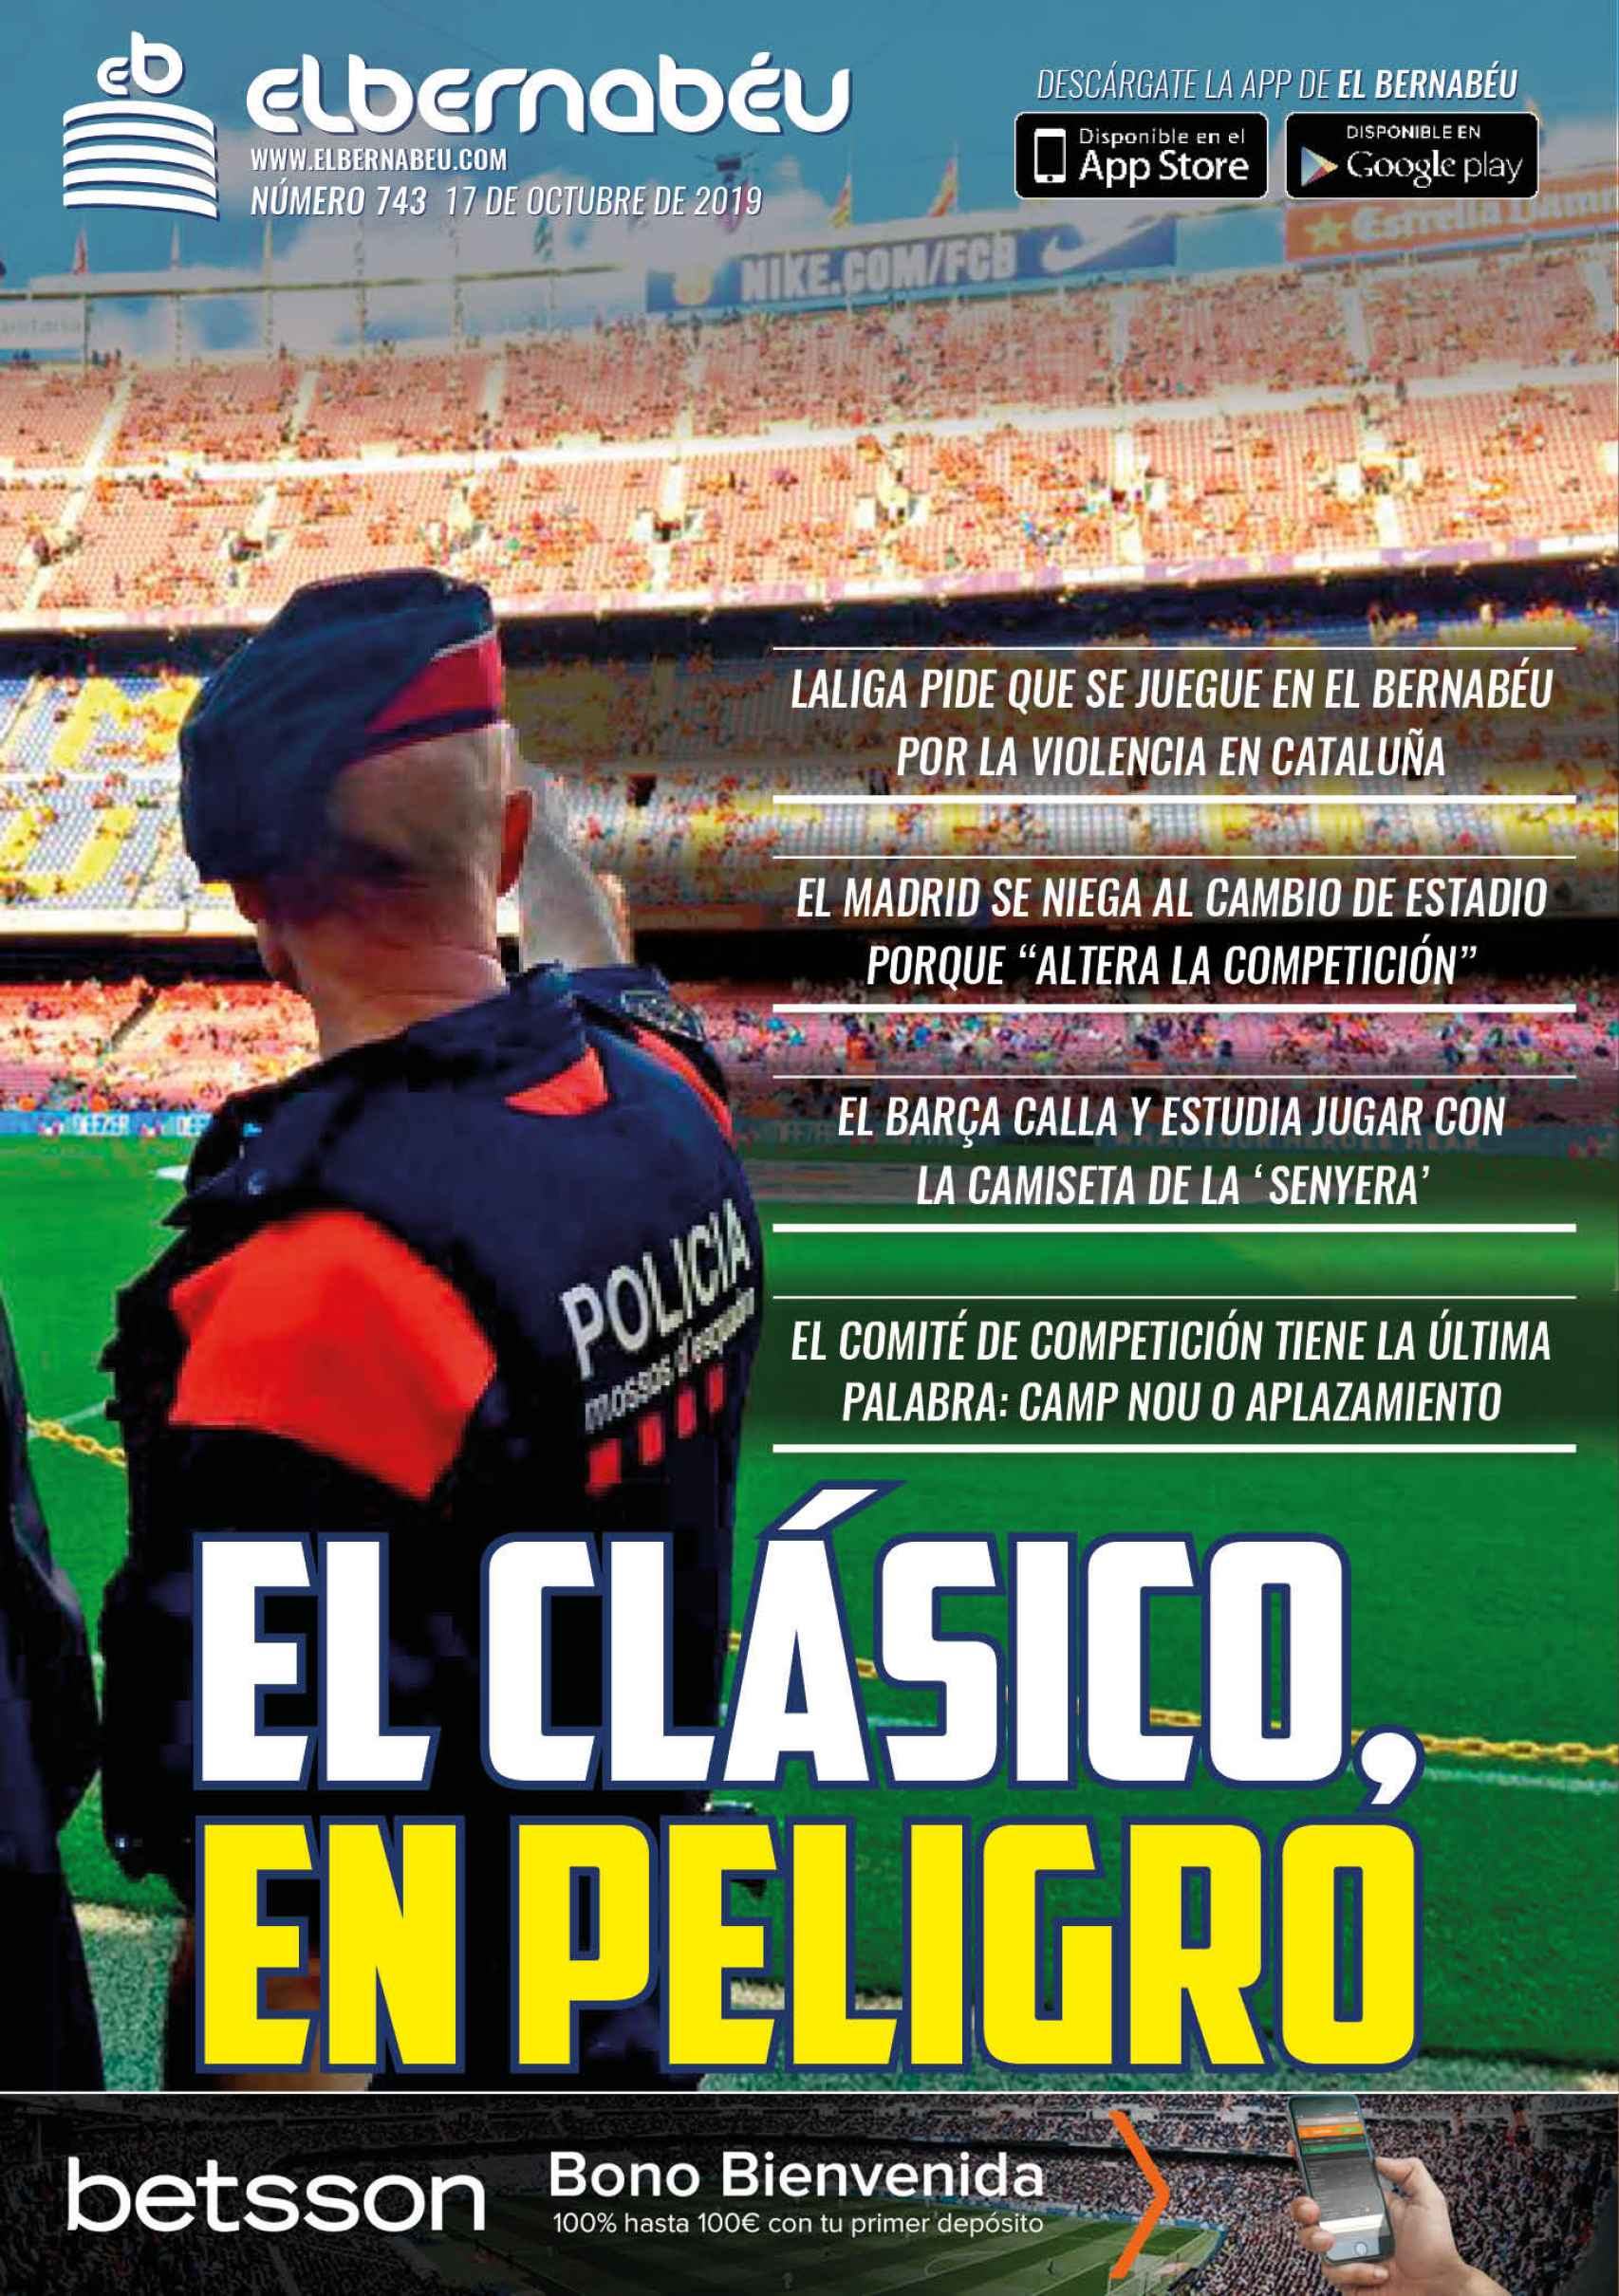 La portada de El Bernabéu (17/10/2019)